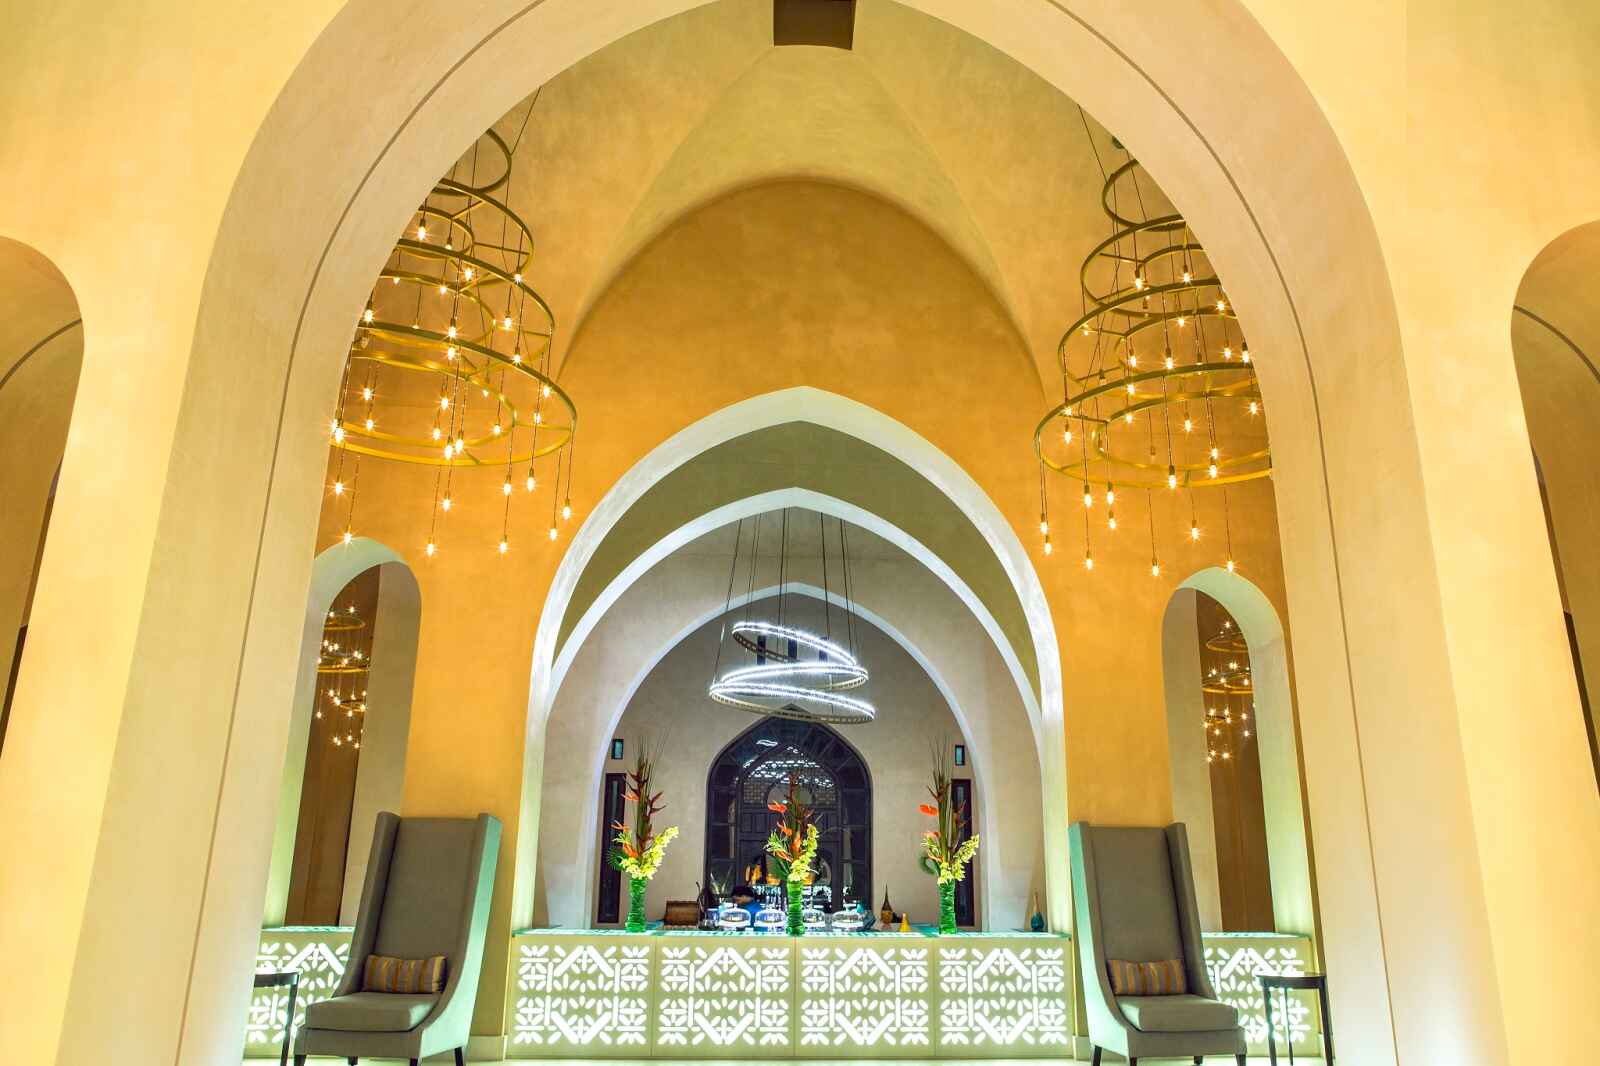 Oman - Hotel Salalah Rotana Resort 5*